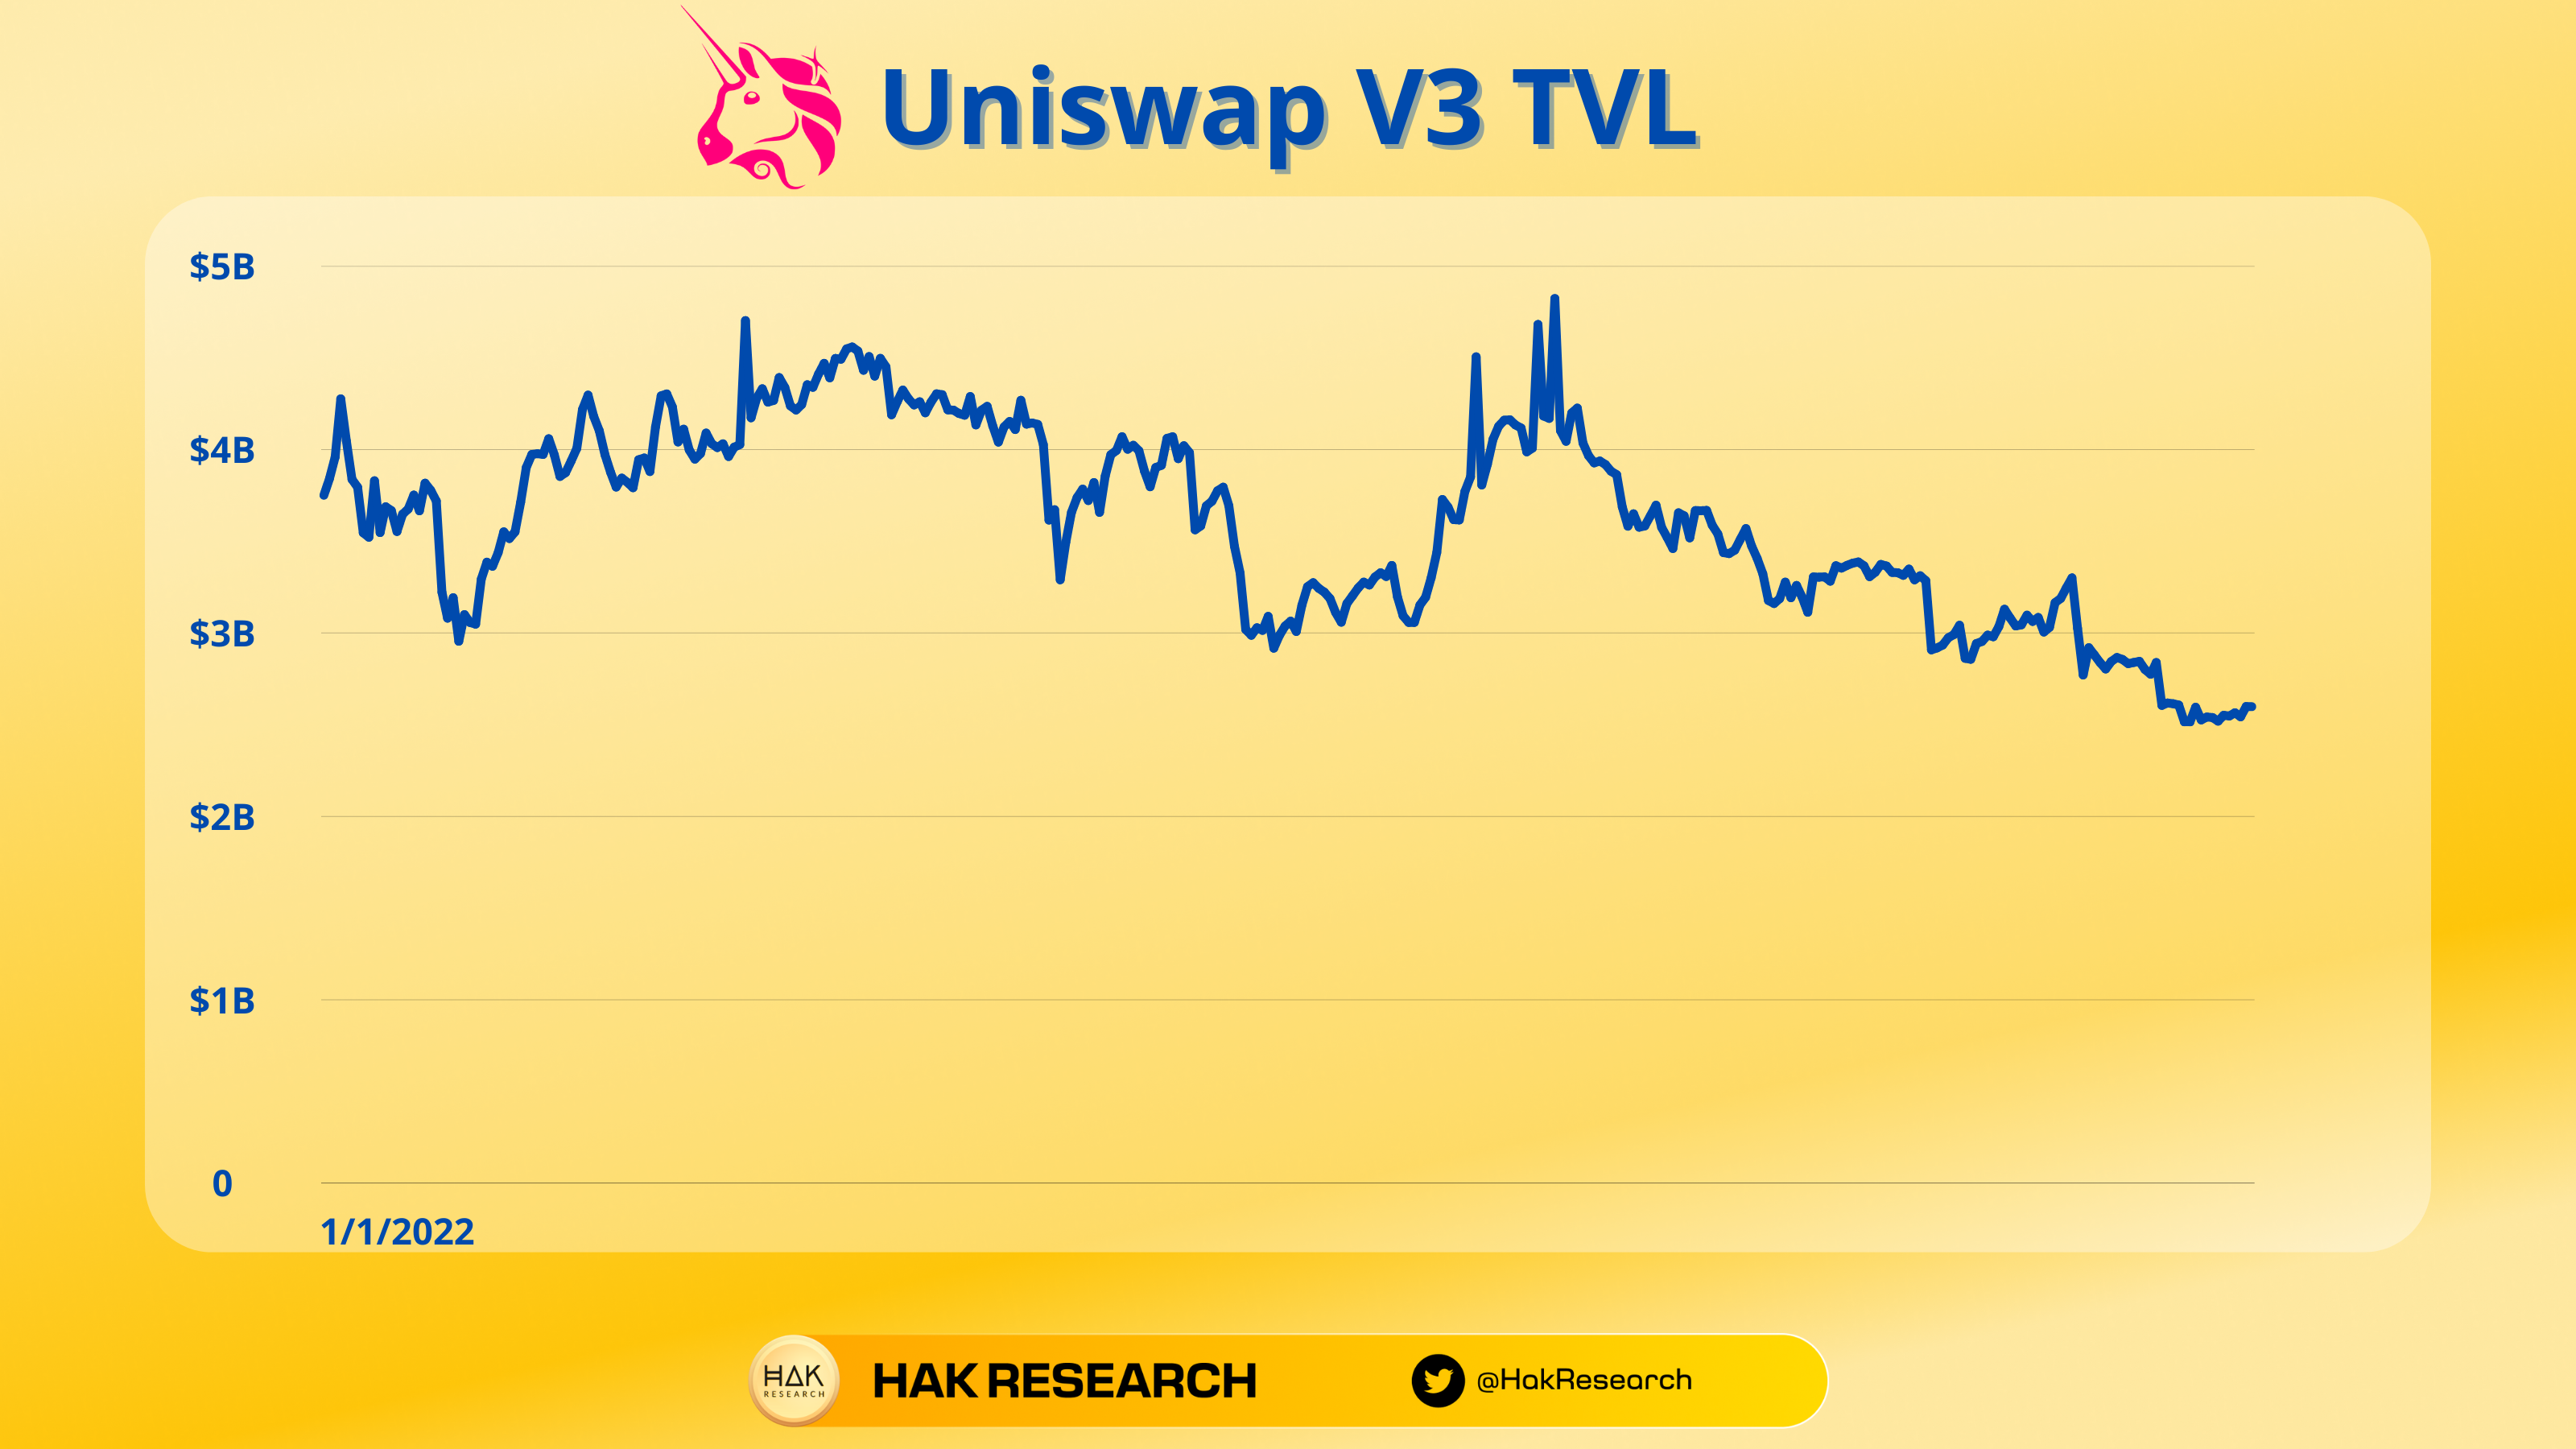 TVL Uniswap V3